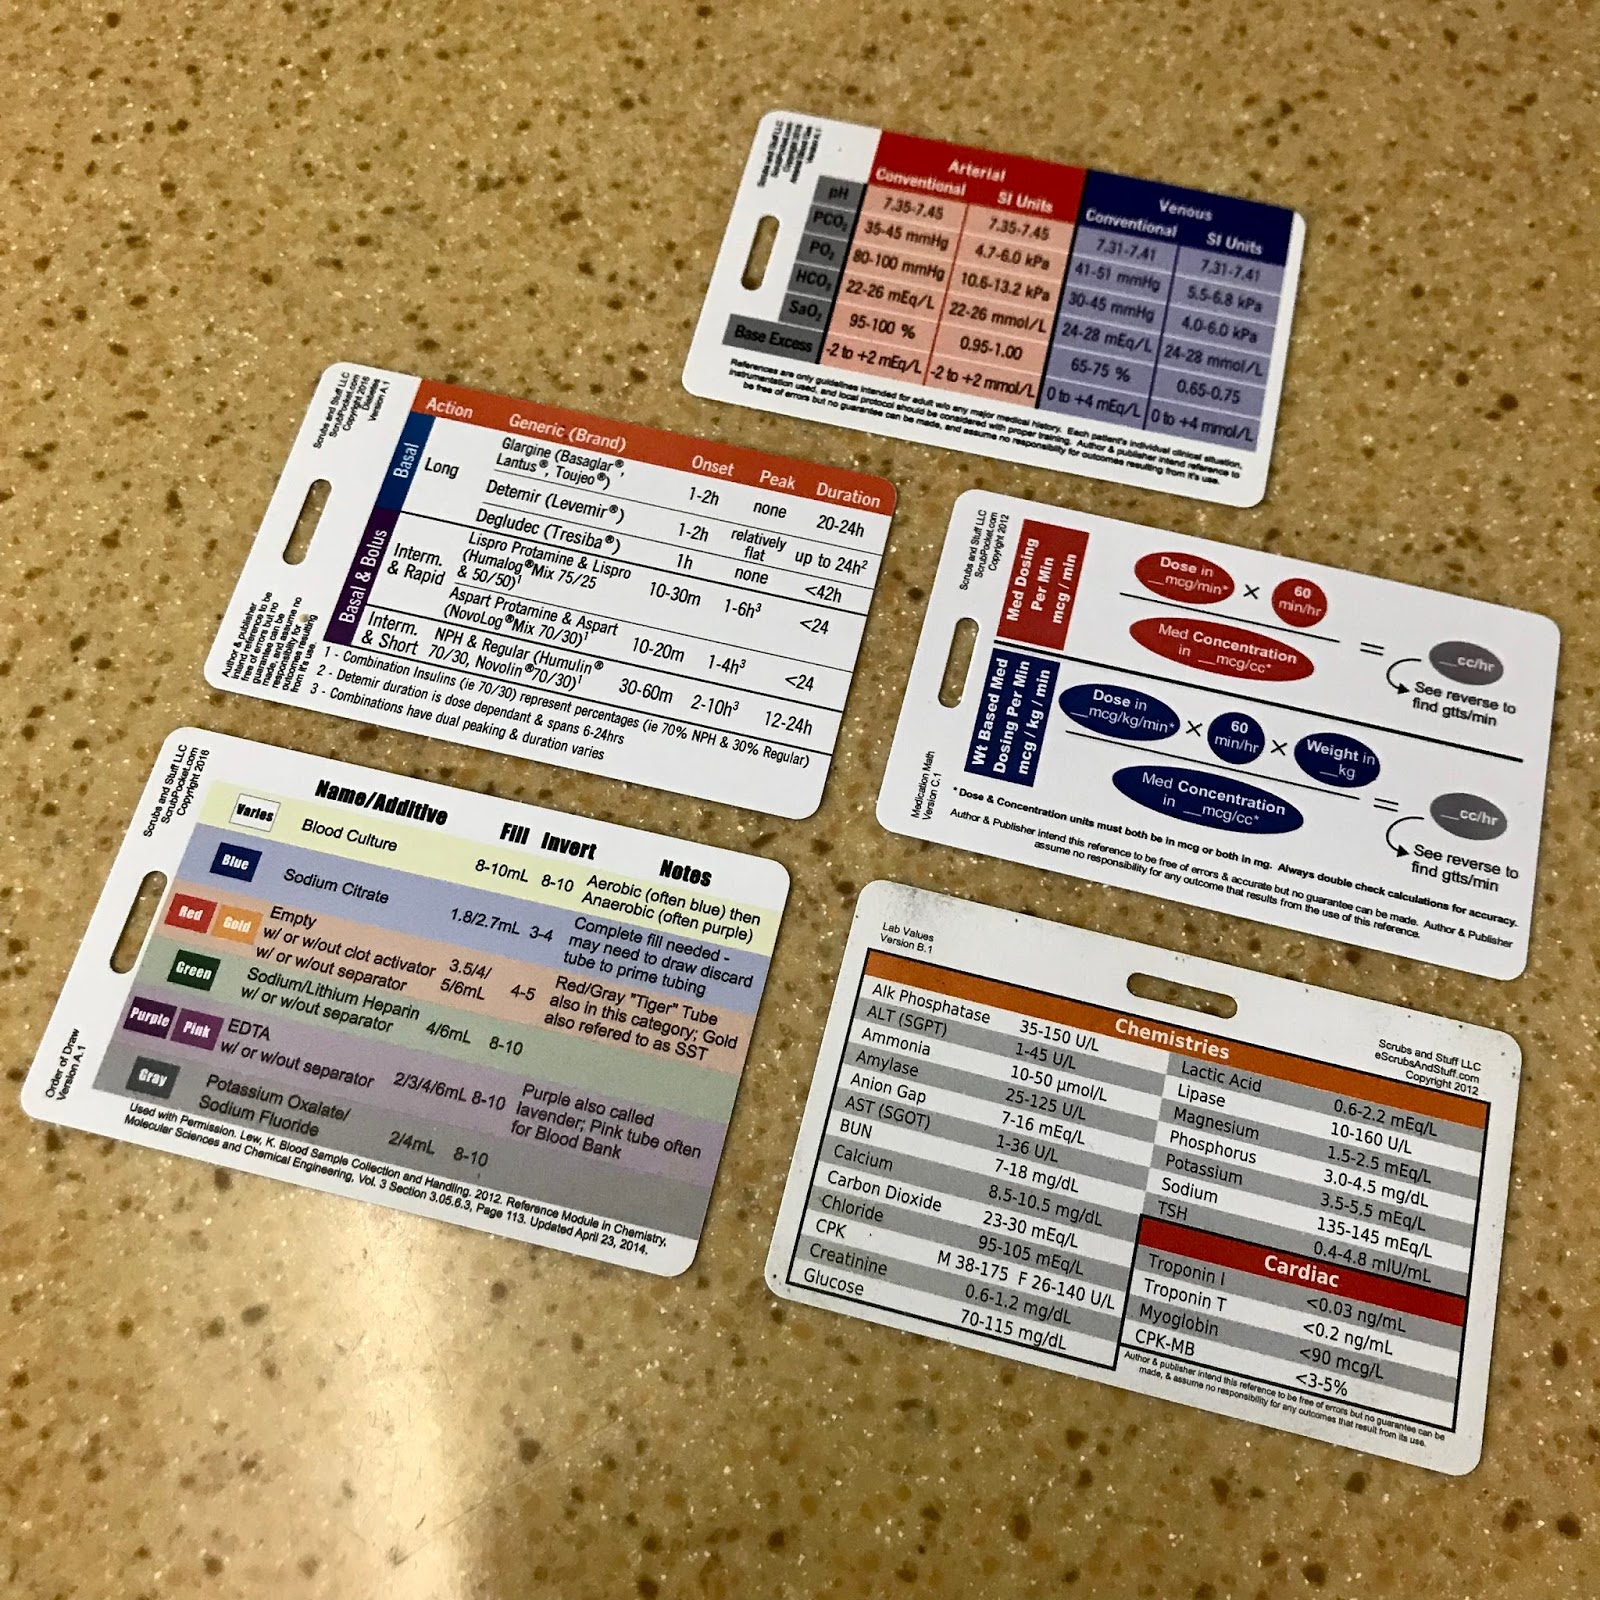 nurse-nacole-nursing-resources-my-nursing-badge-cards